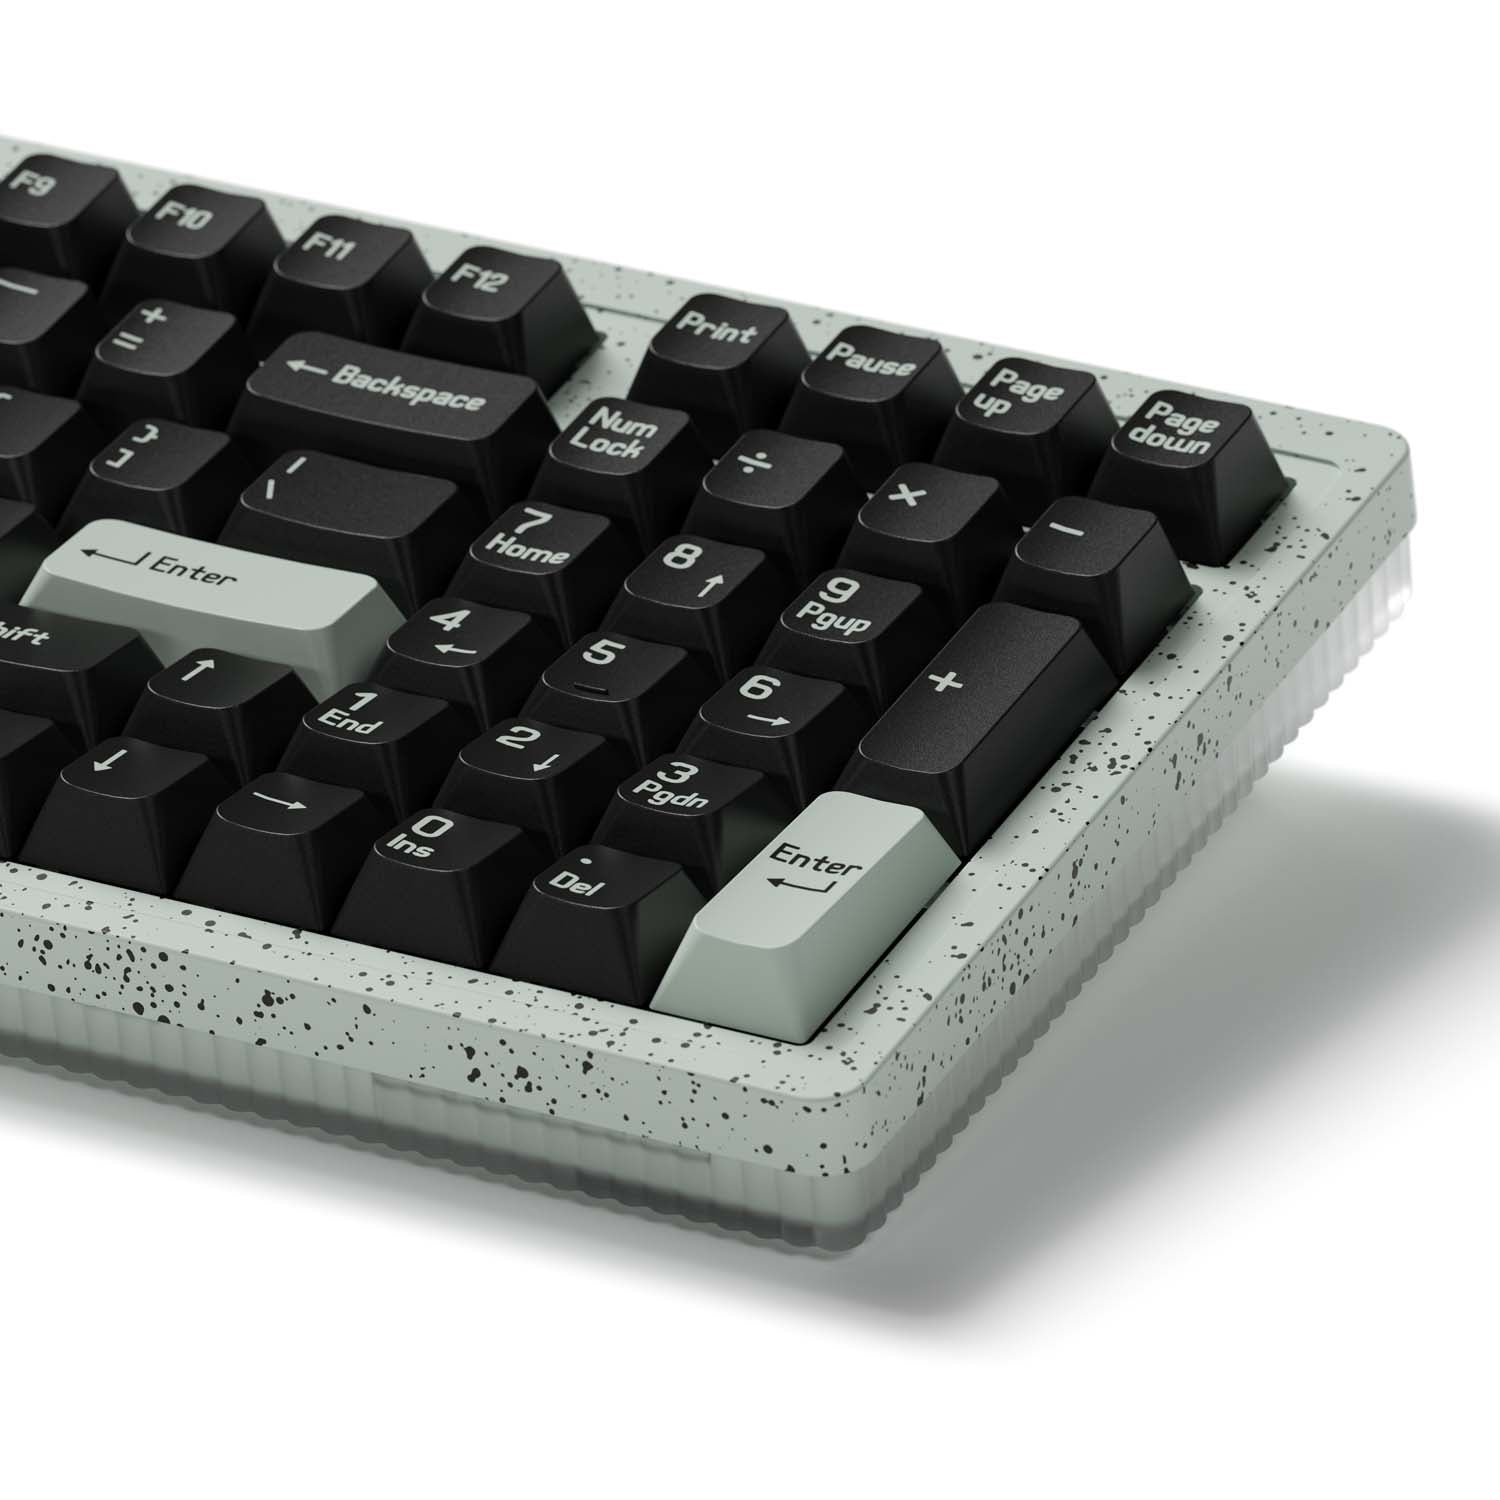 MelGeek Modern97 Fountain Work&Game Compact Mechanical Keyboard